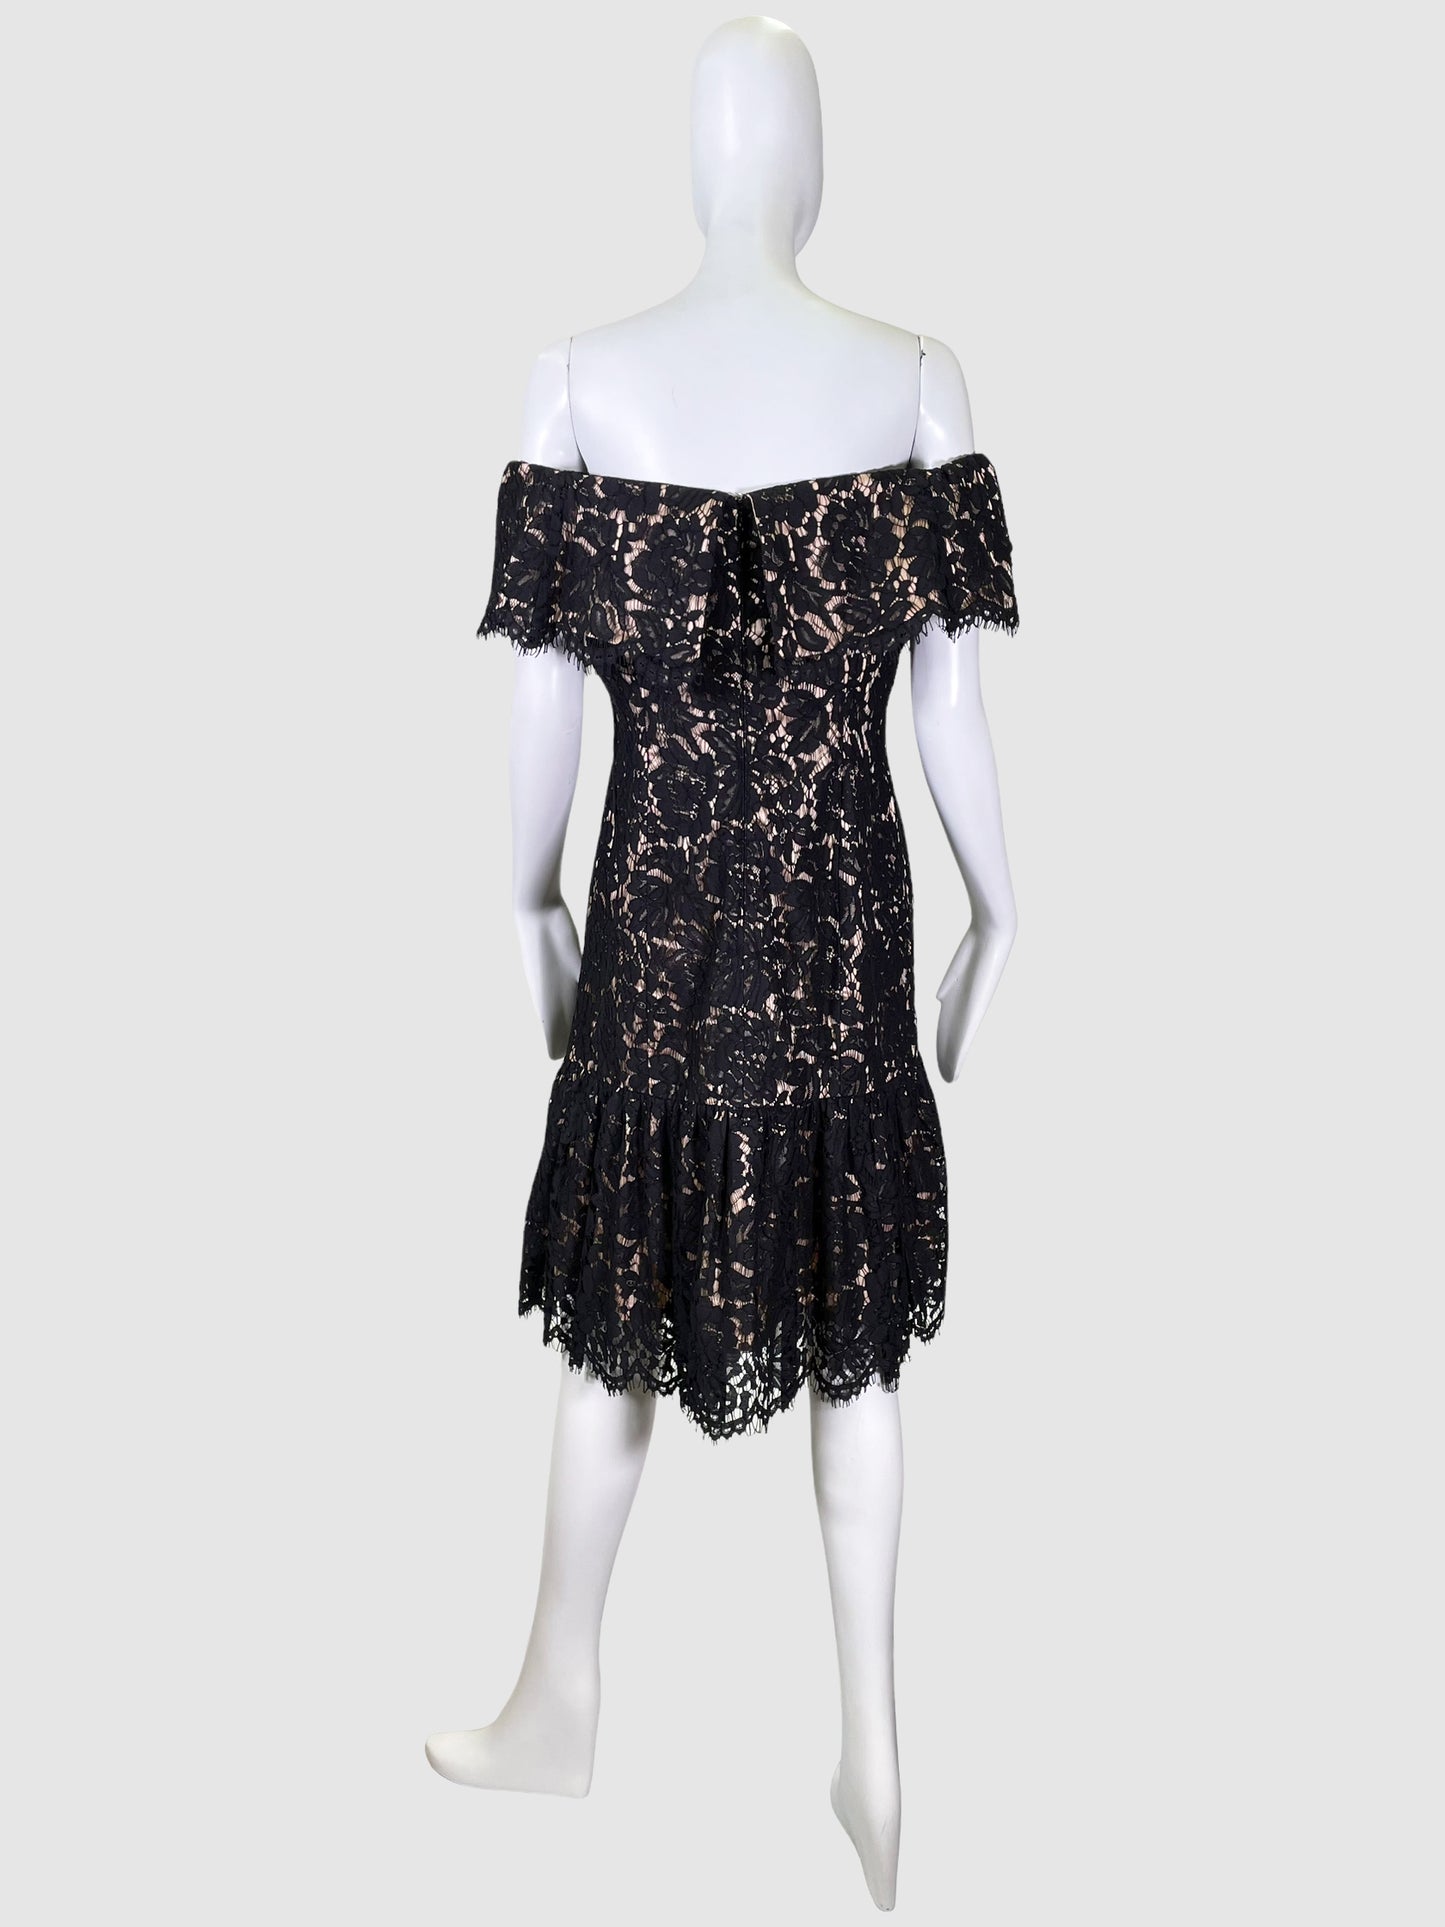 Eliza J Lace Cold Shoulder Dress - Size 8